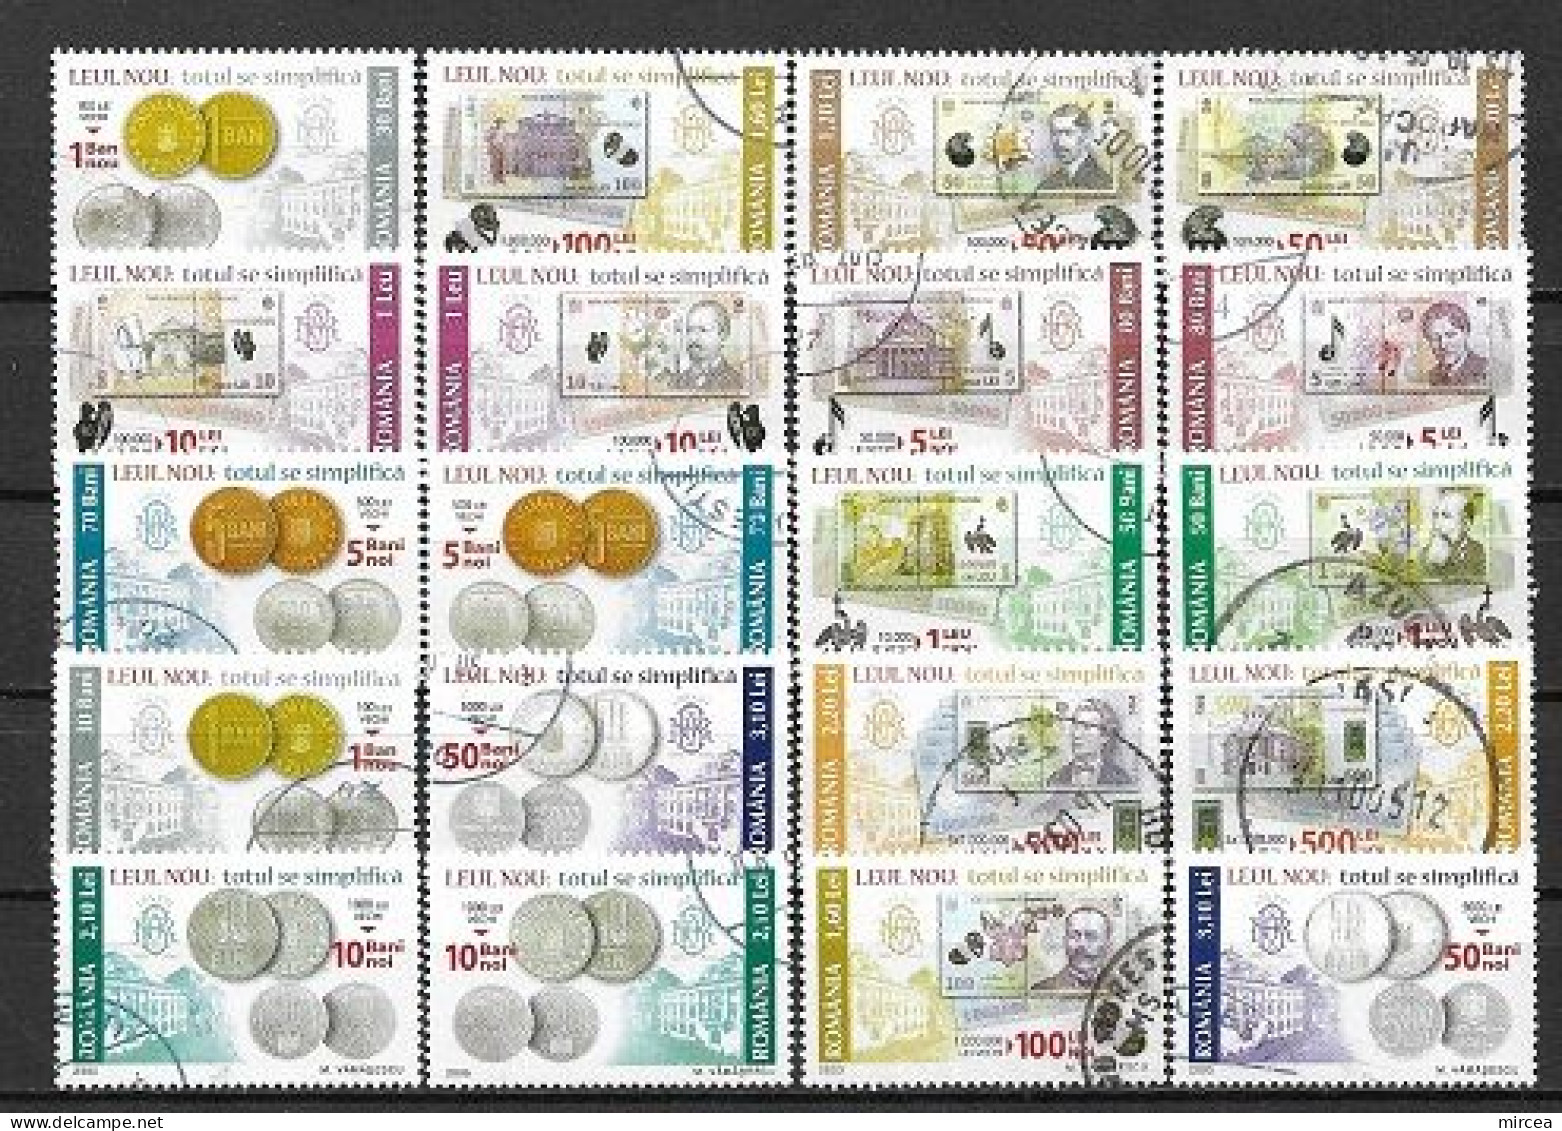 C3975 - Roumanie 2005 - 20v.obliteres - Used Stamps